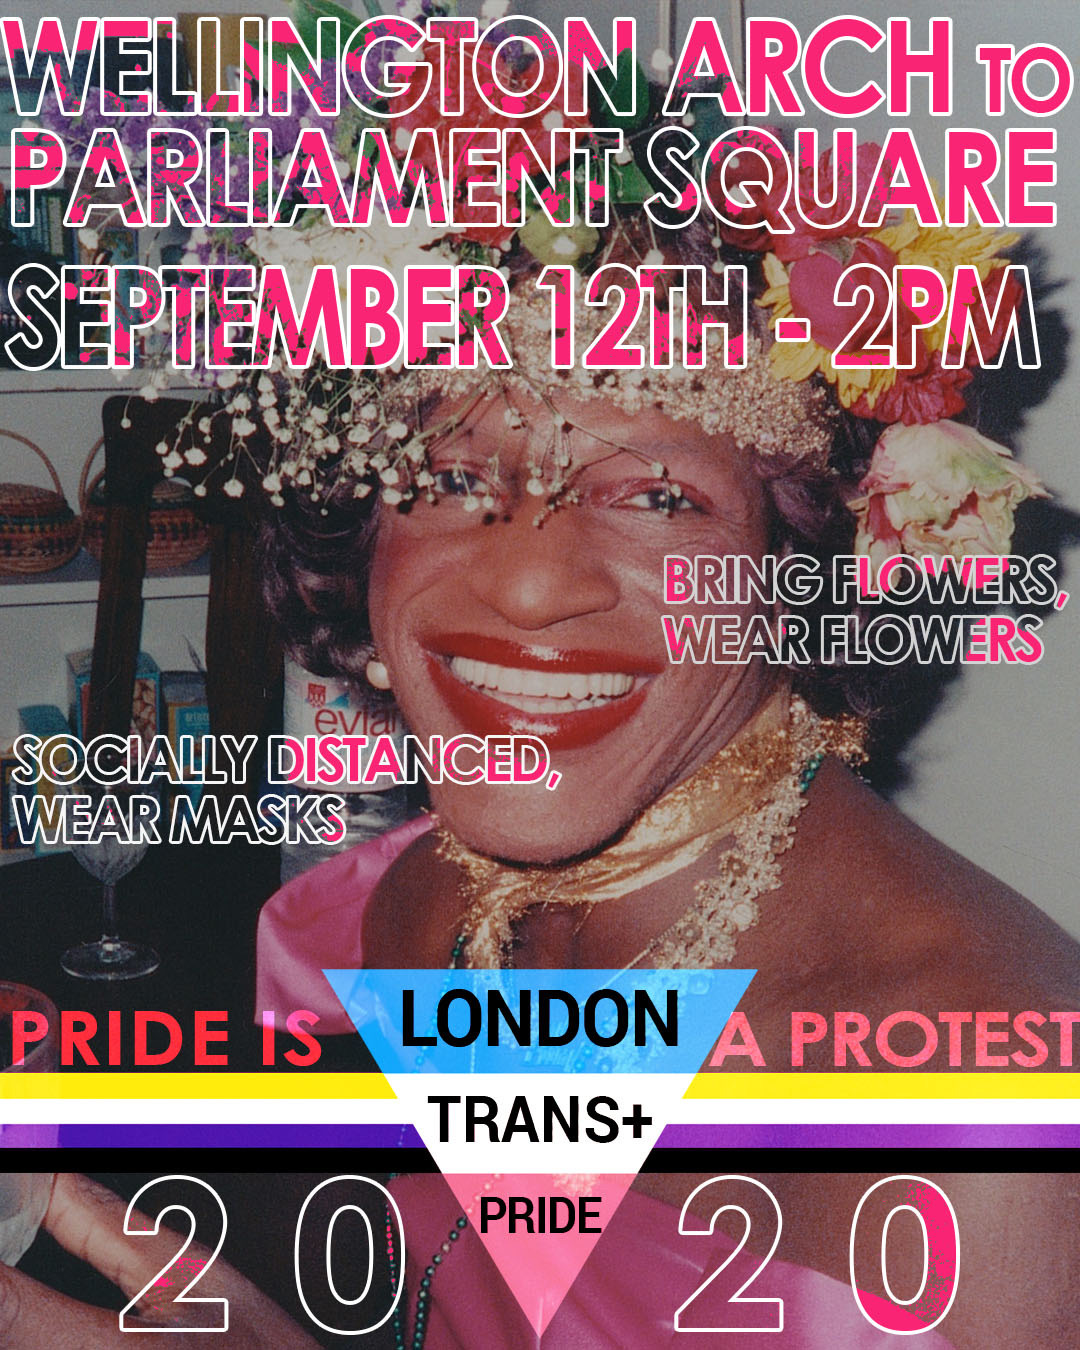 London Trans+ Pride